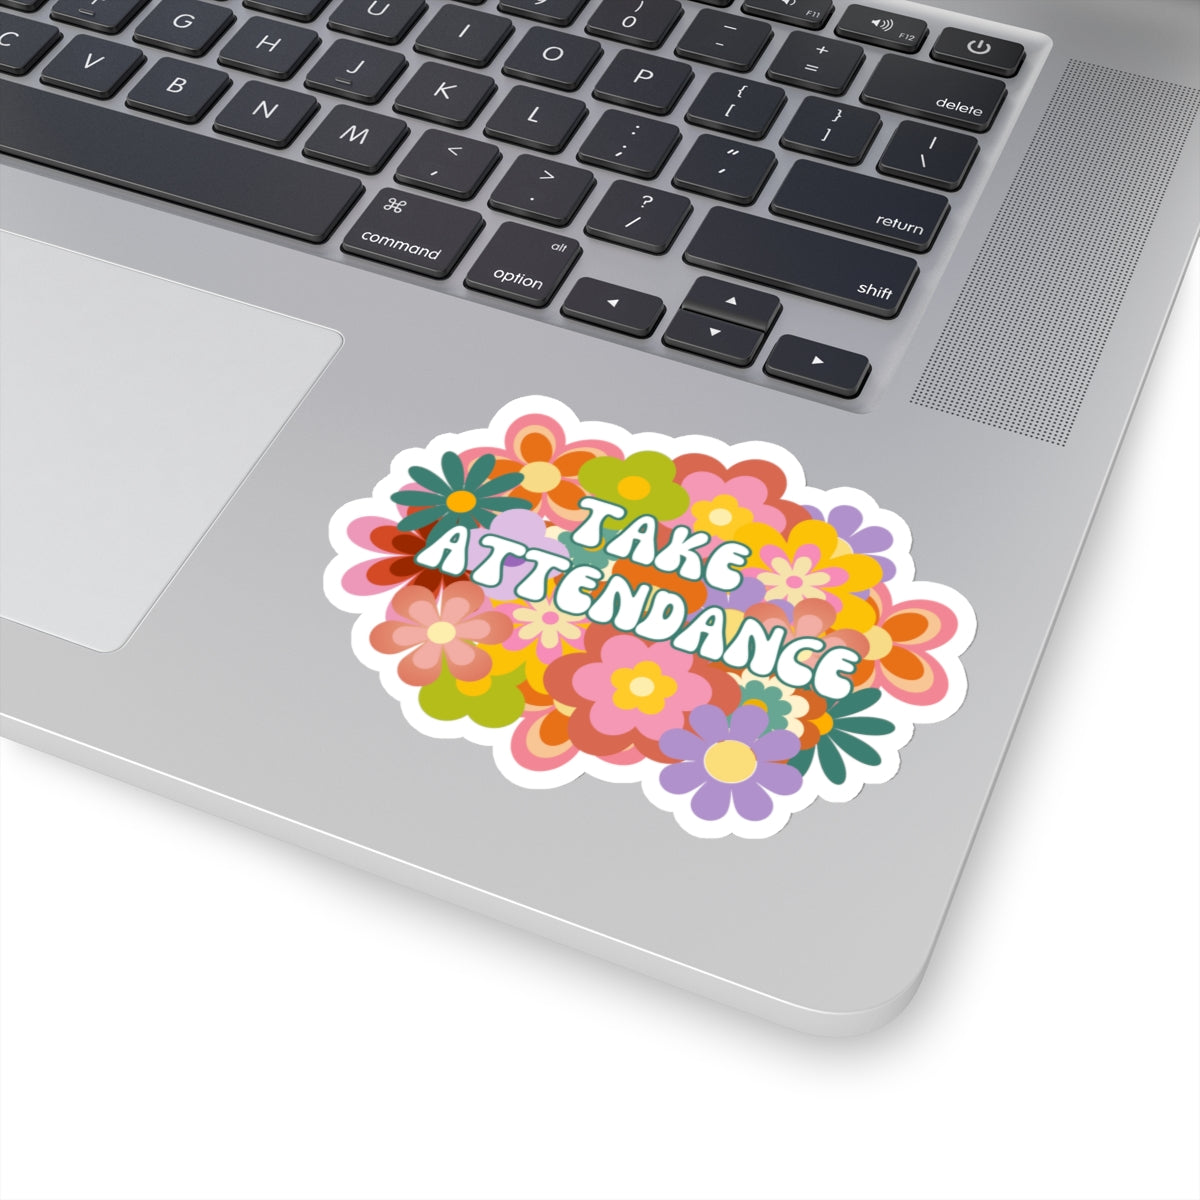 Retro Flower Take Attendance Teacher Kiss-Cut Stickers